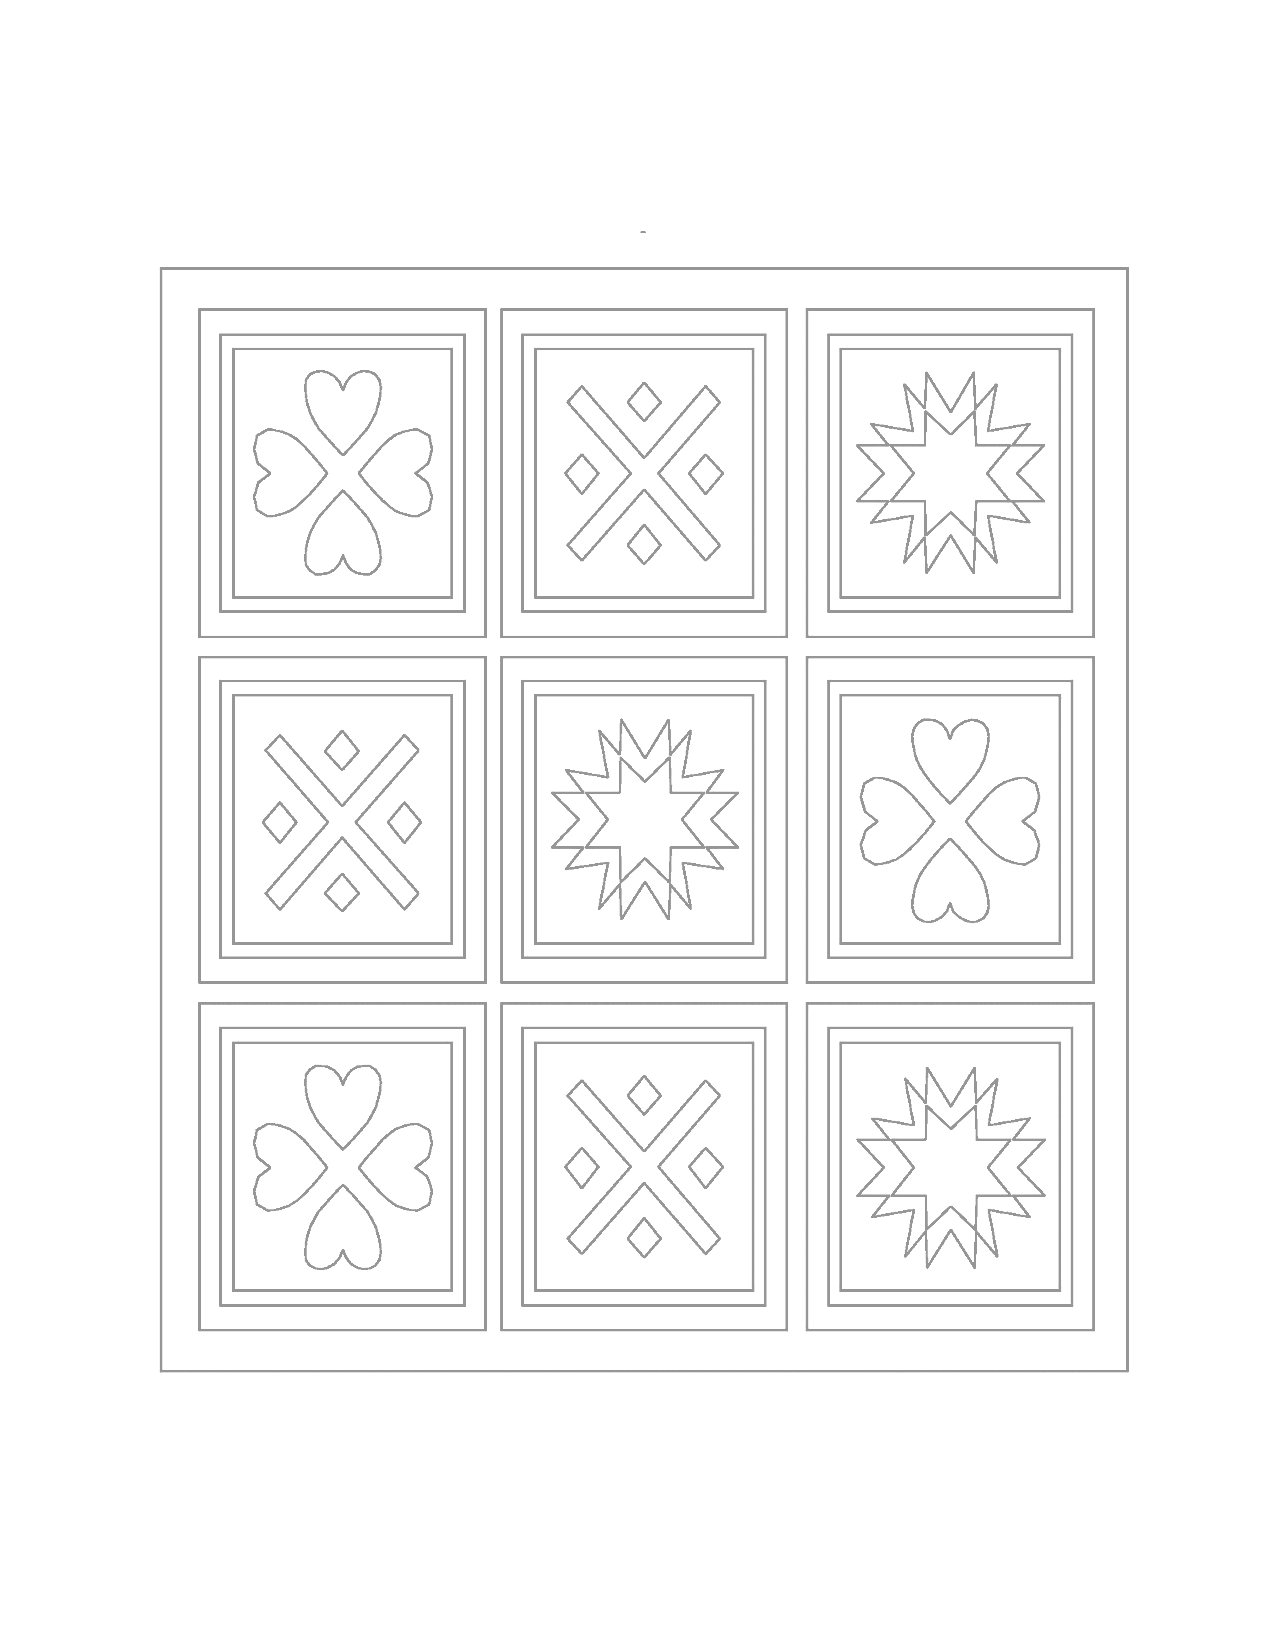 Quilt Squares Traceable Coloring Page